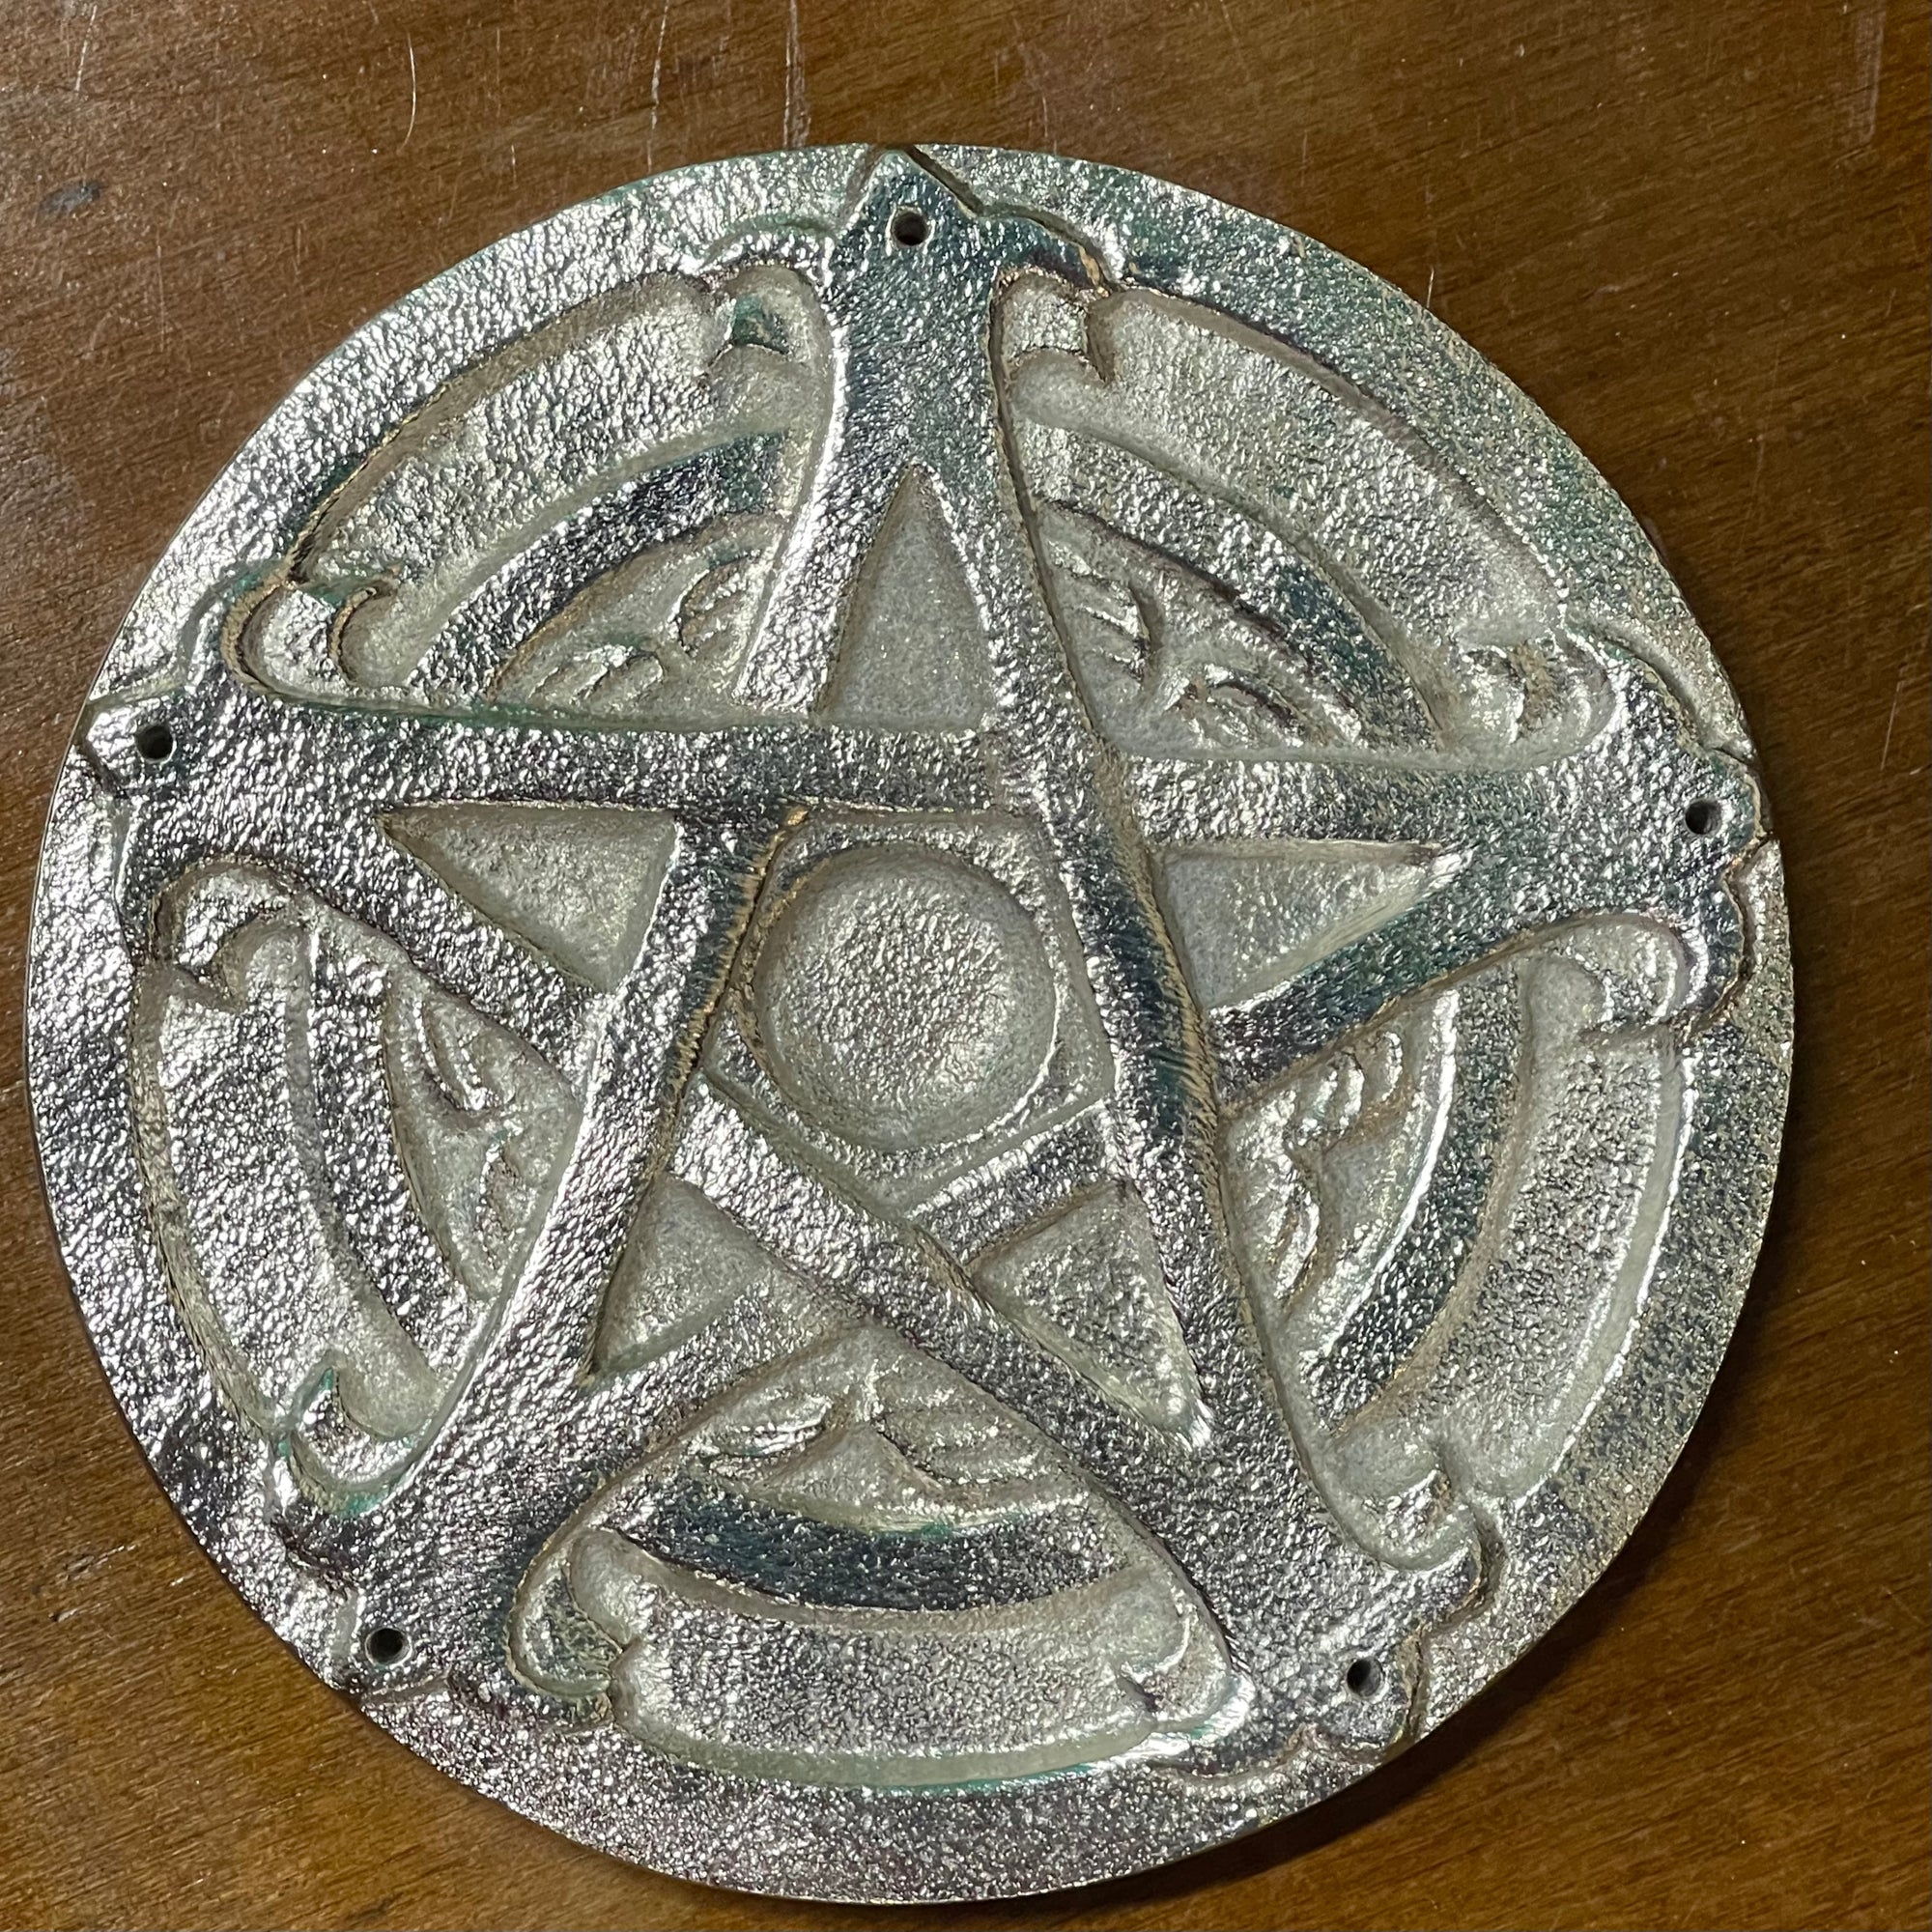 4" Pentacle wicca altar tile - The Spirit of Life